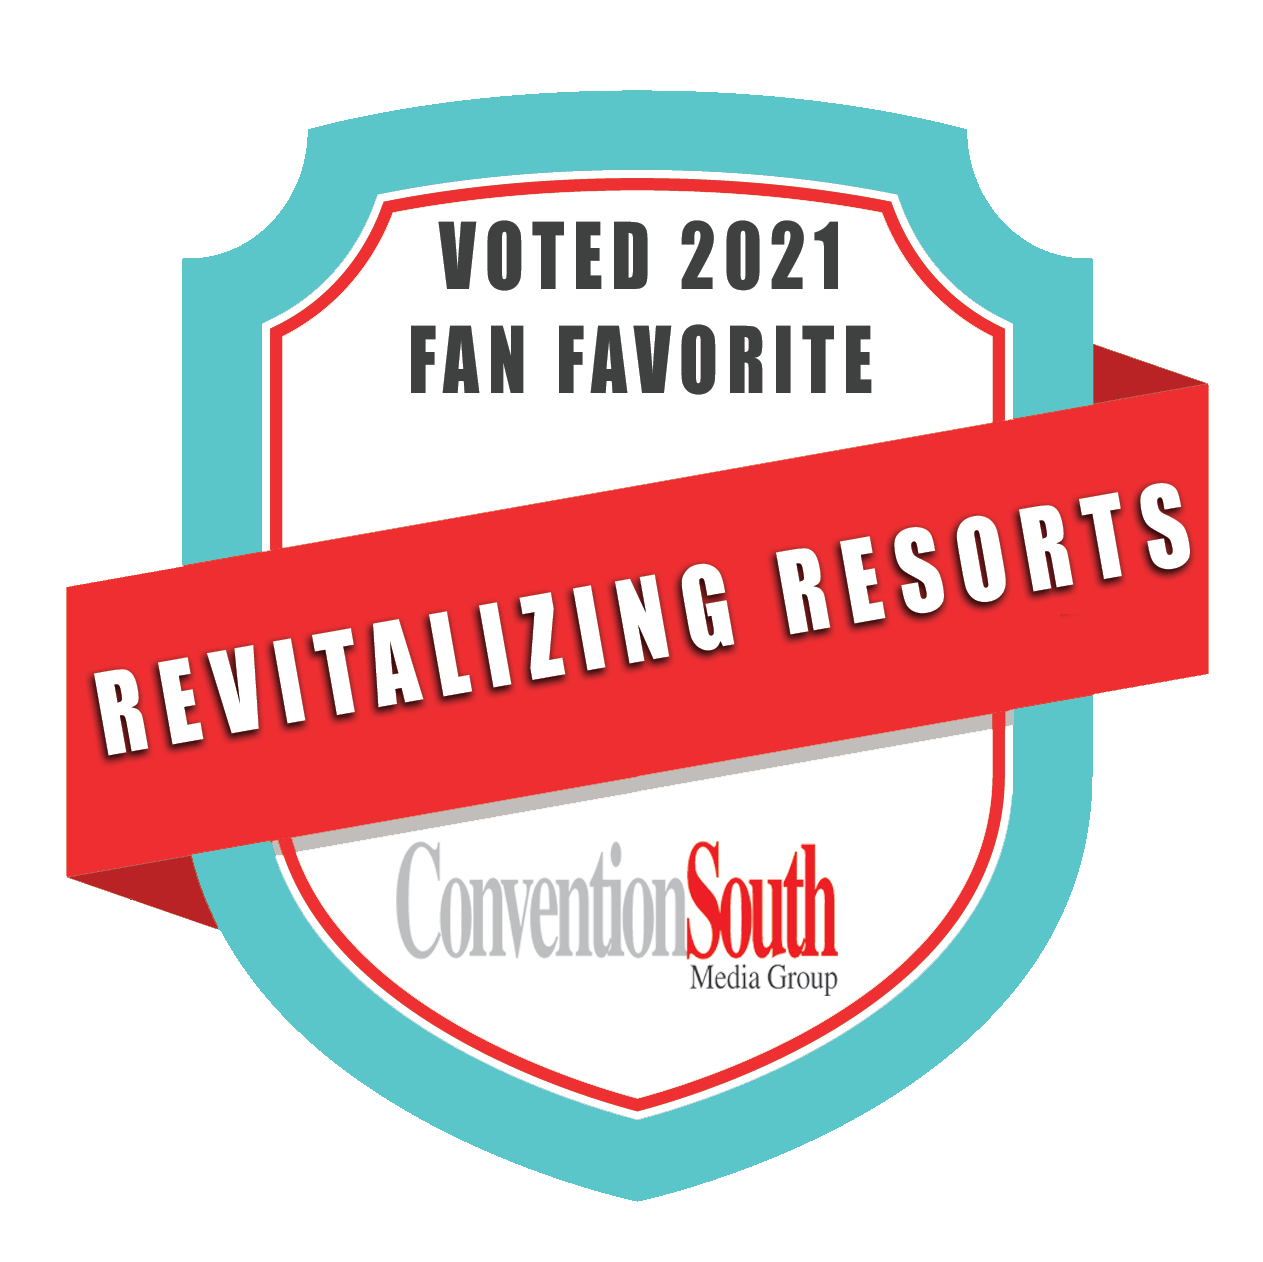 Revitalizing Resorts Award, 2021 Fan Favorite